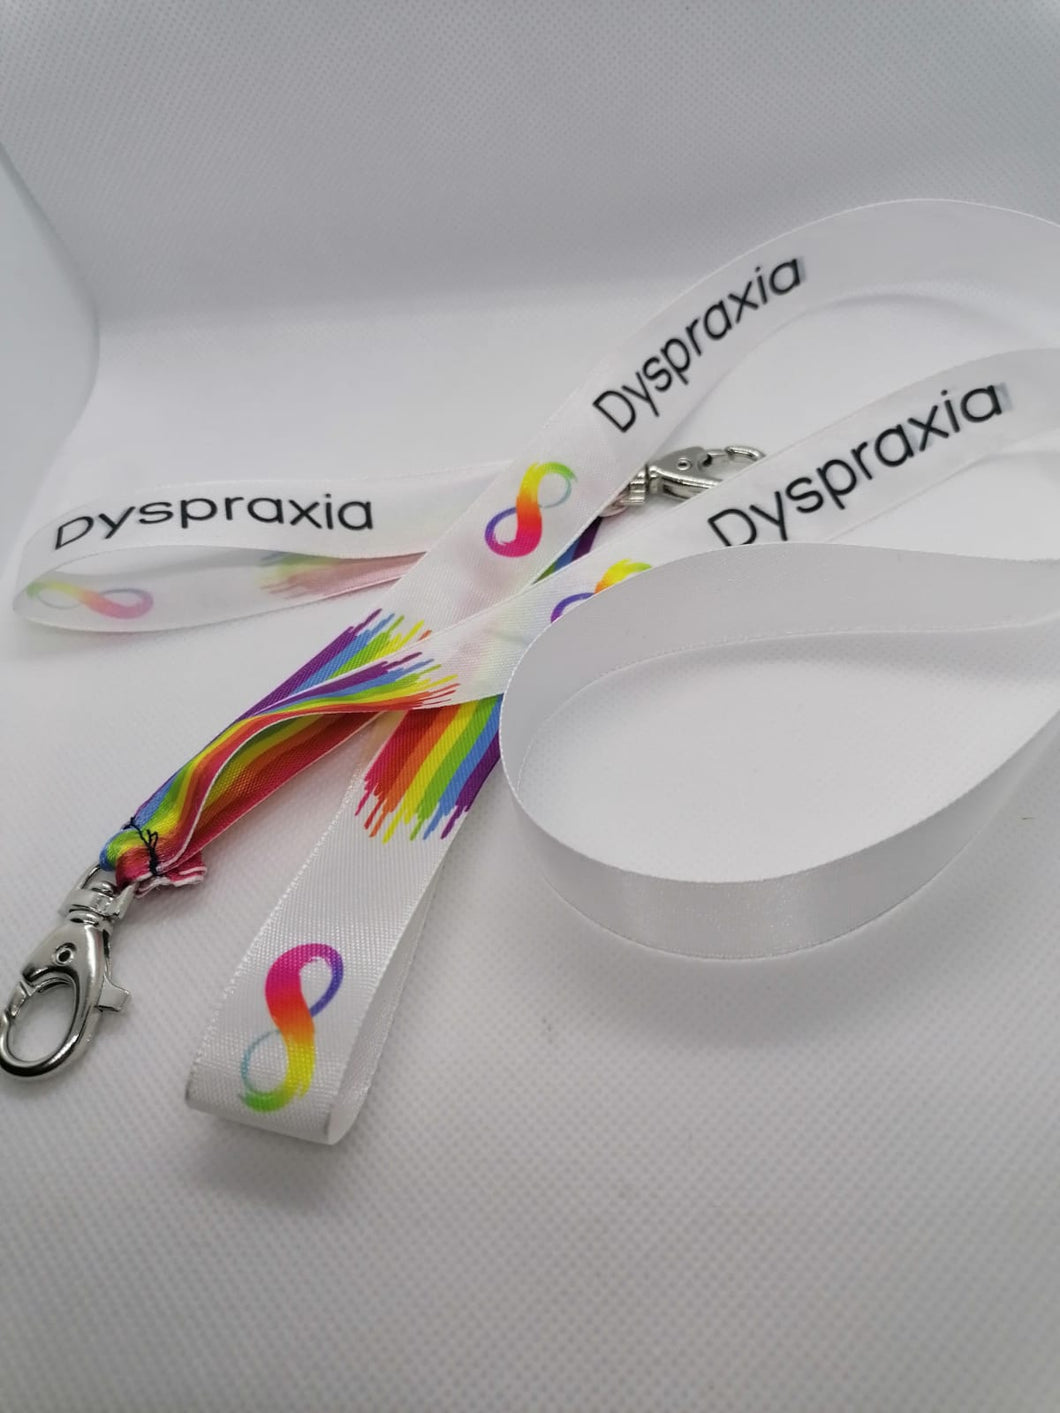 Dyspraxia Lanyard and Wrist Straps